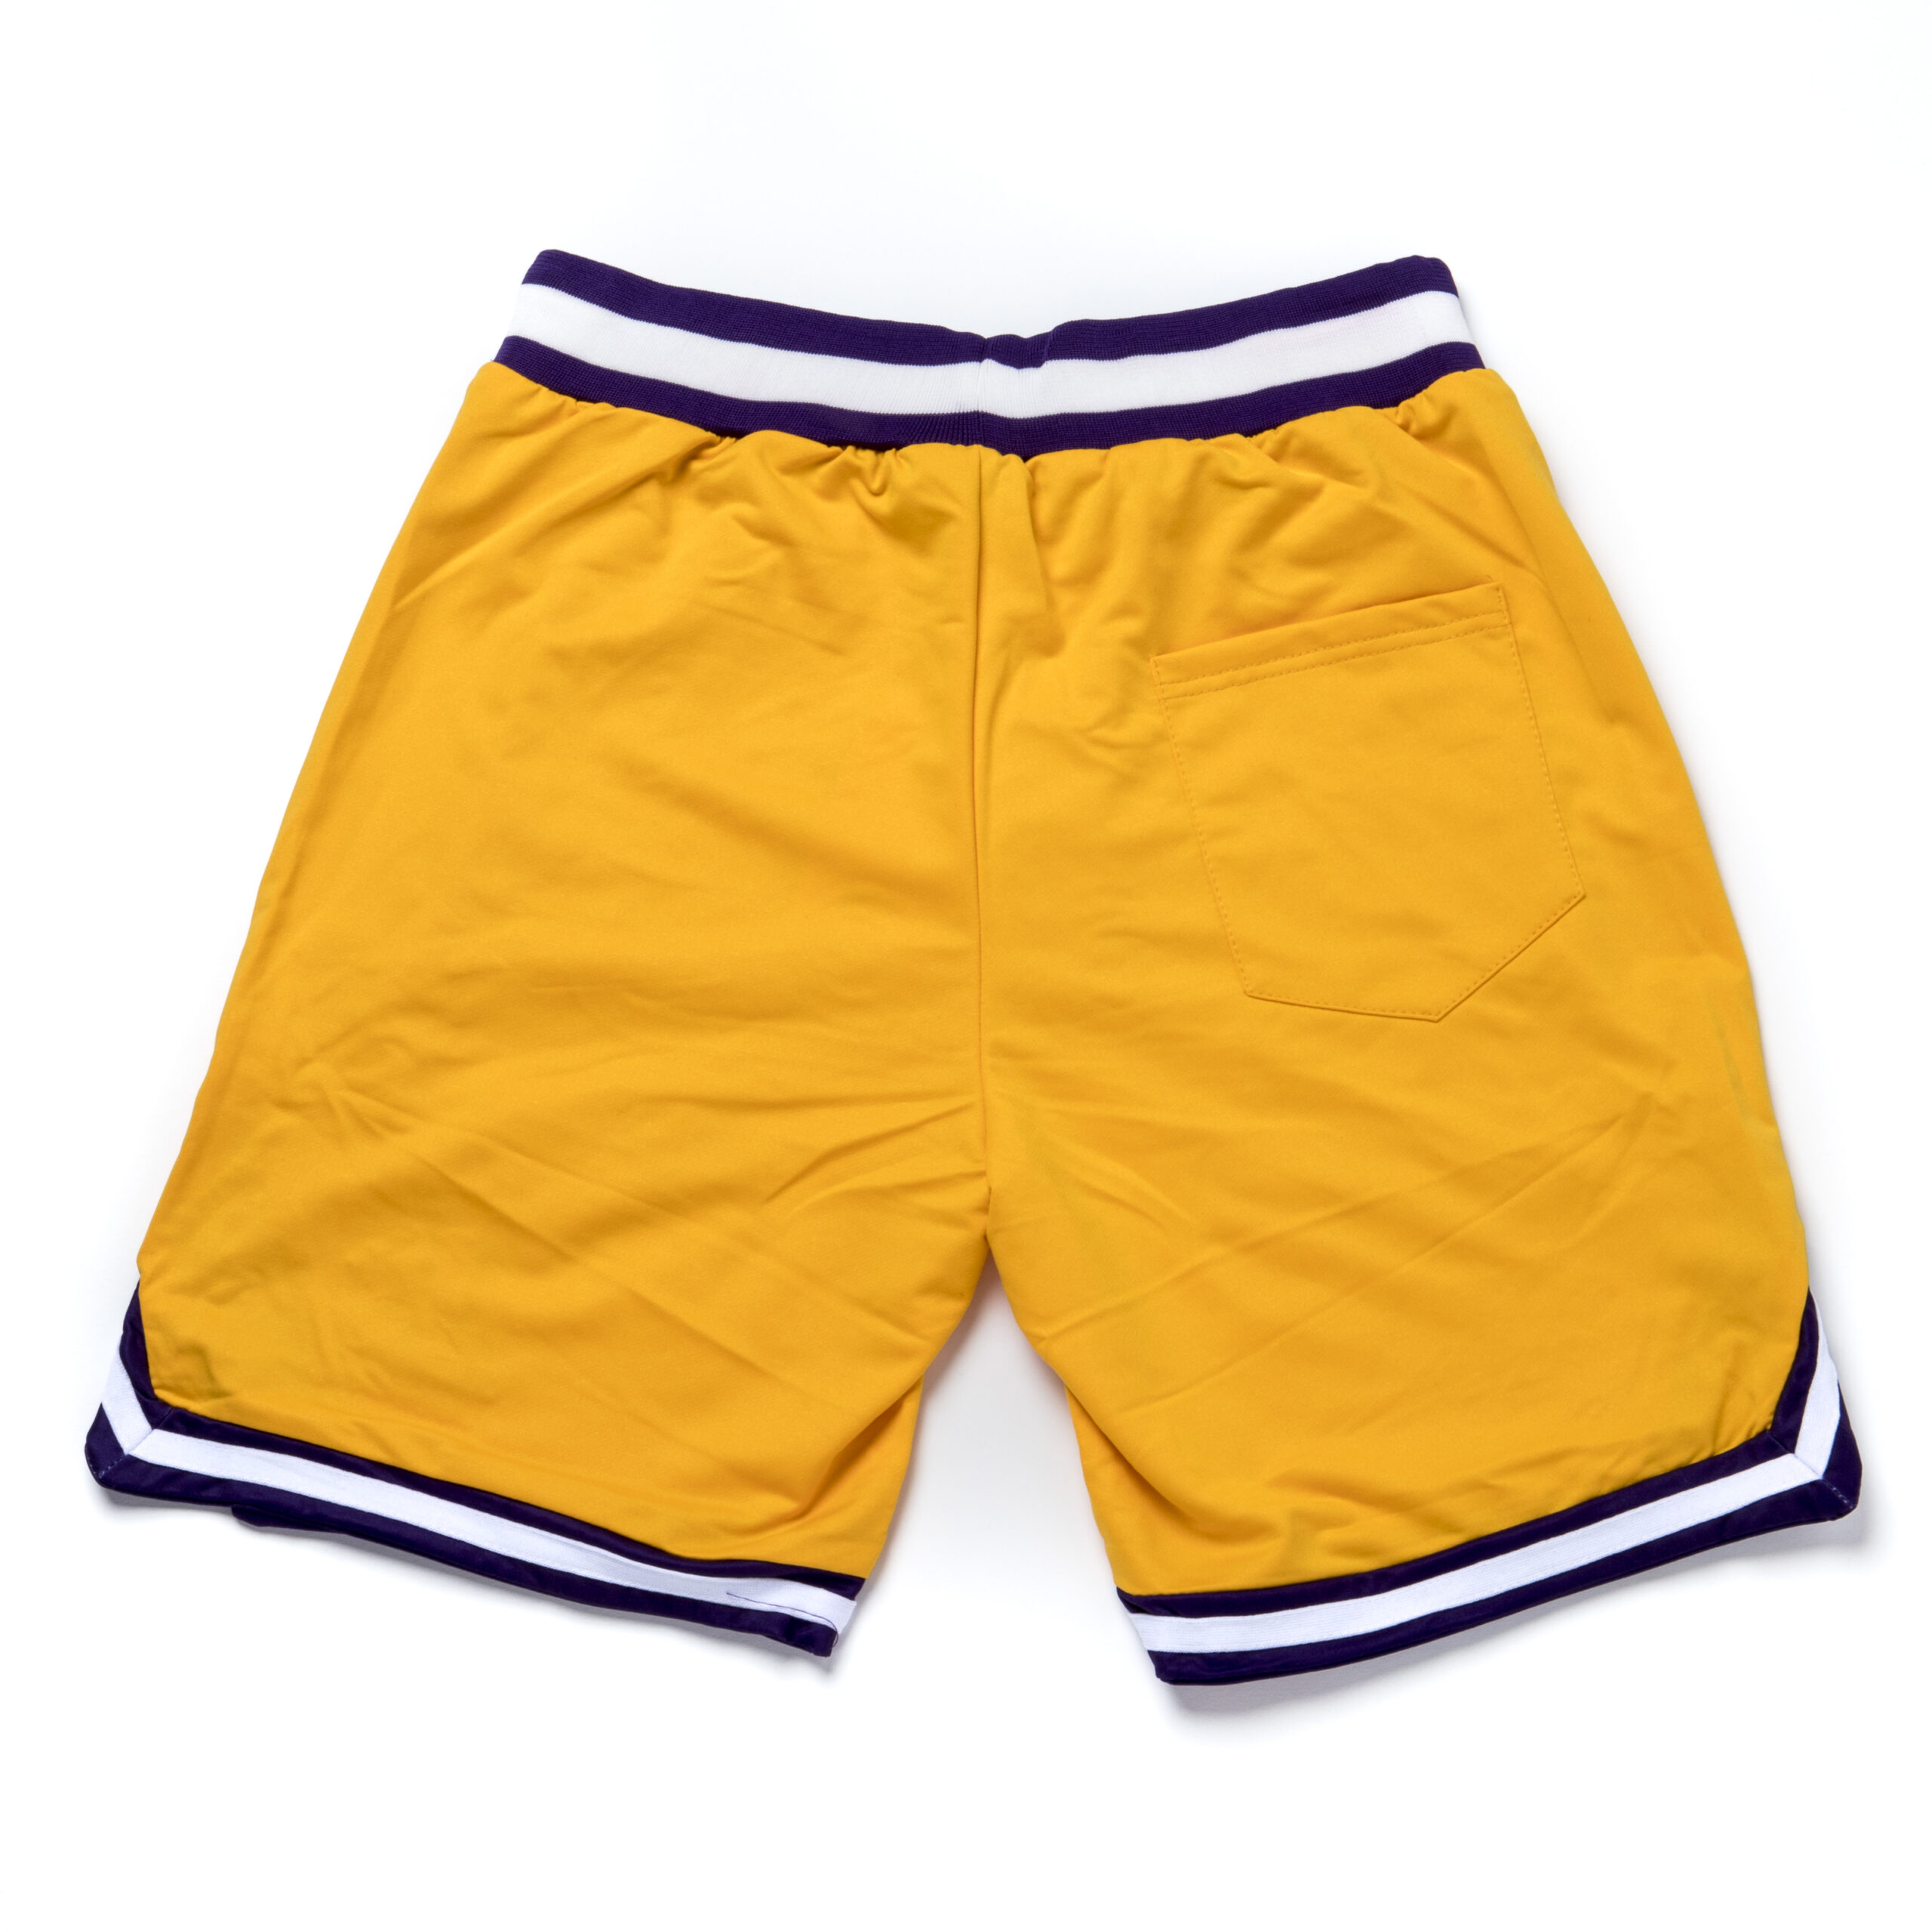 Lakeshow “1KKICKS” Ballin' Shorts